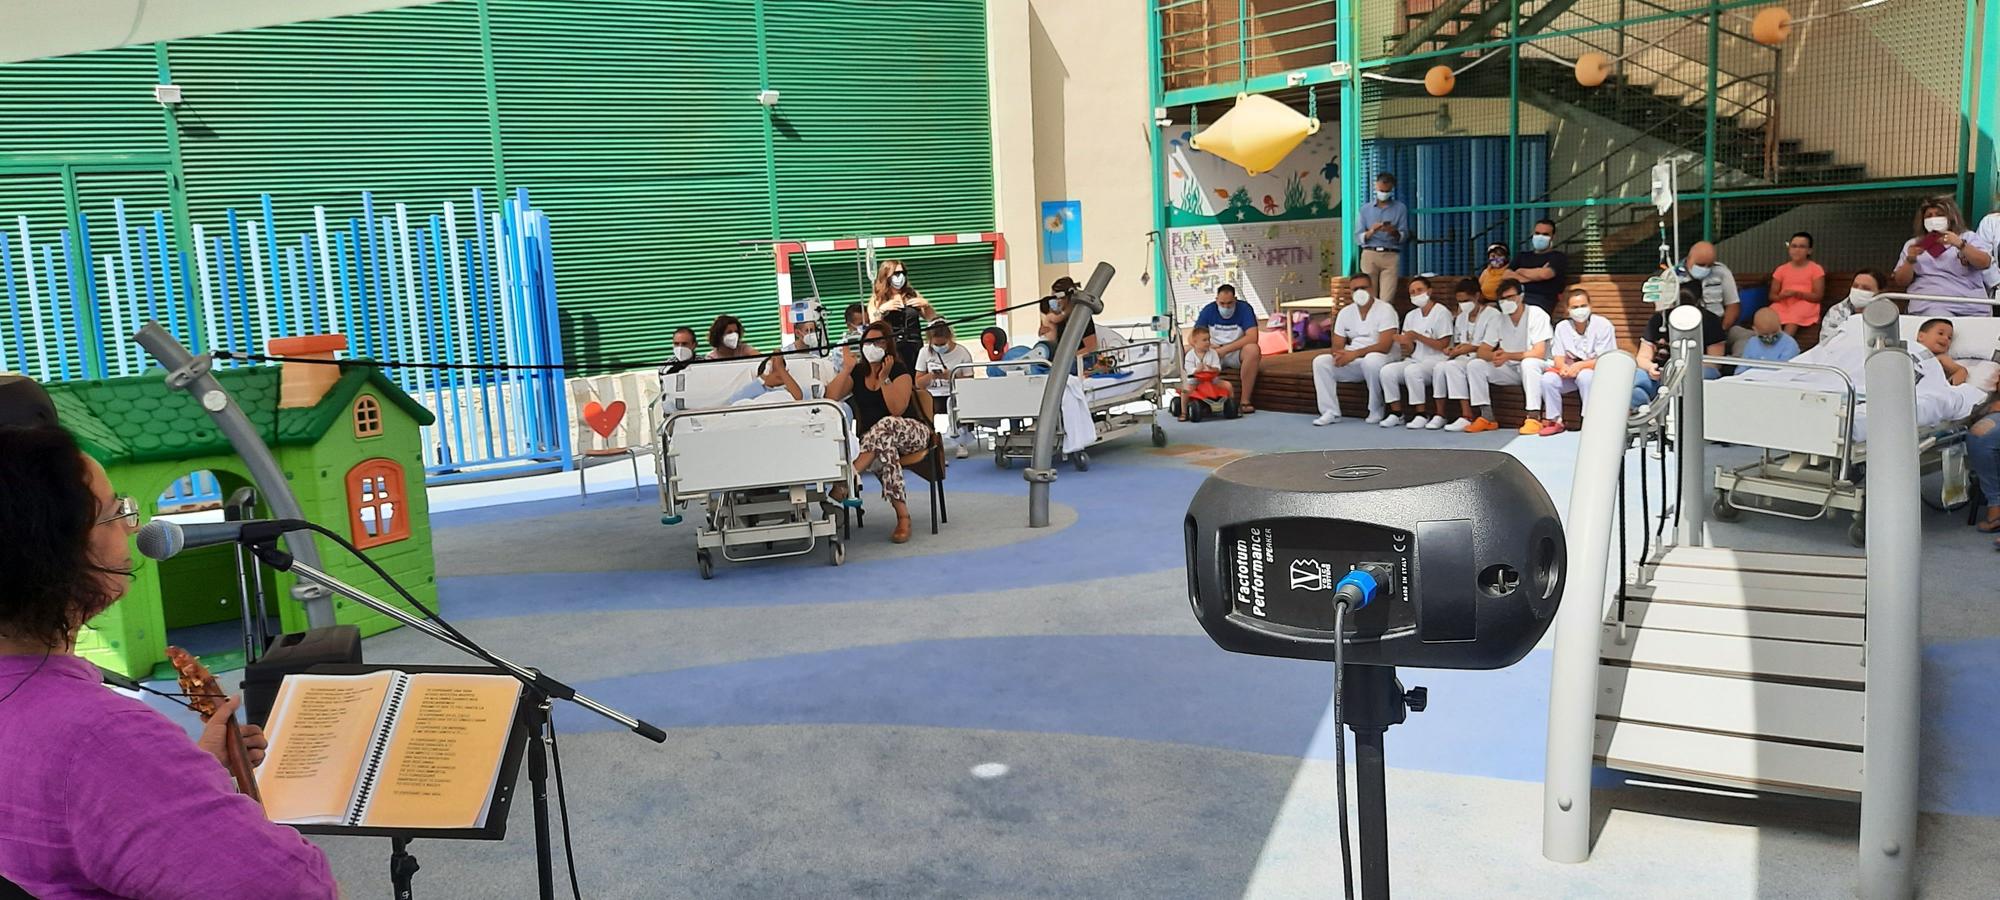 Inma Serrano cierra el curso del Aula Infantil del Hospital de Alicante